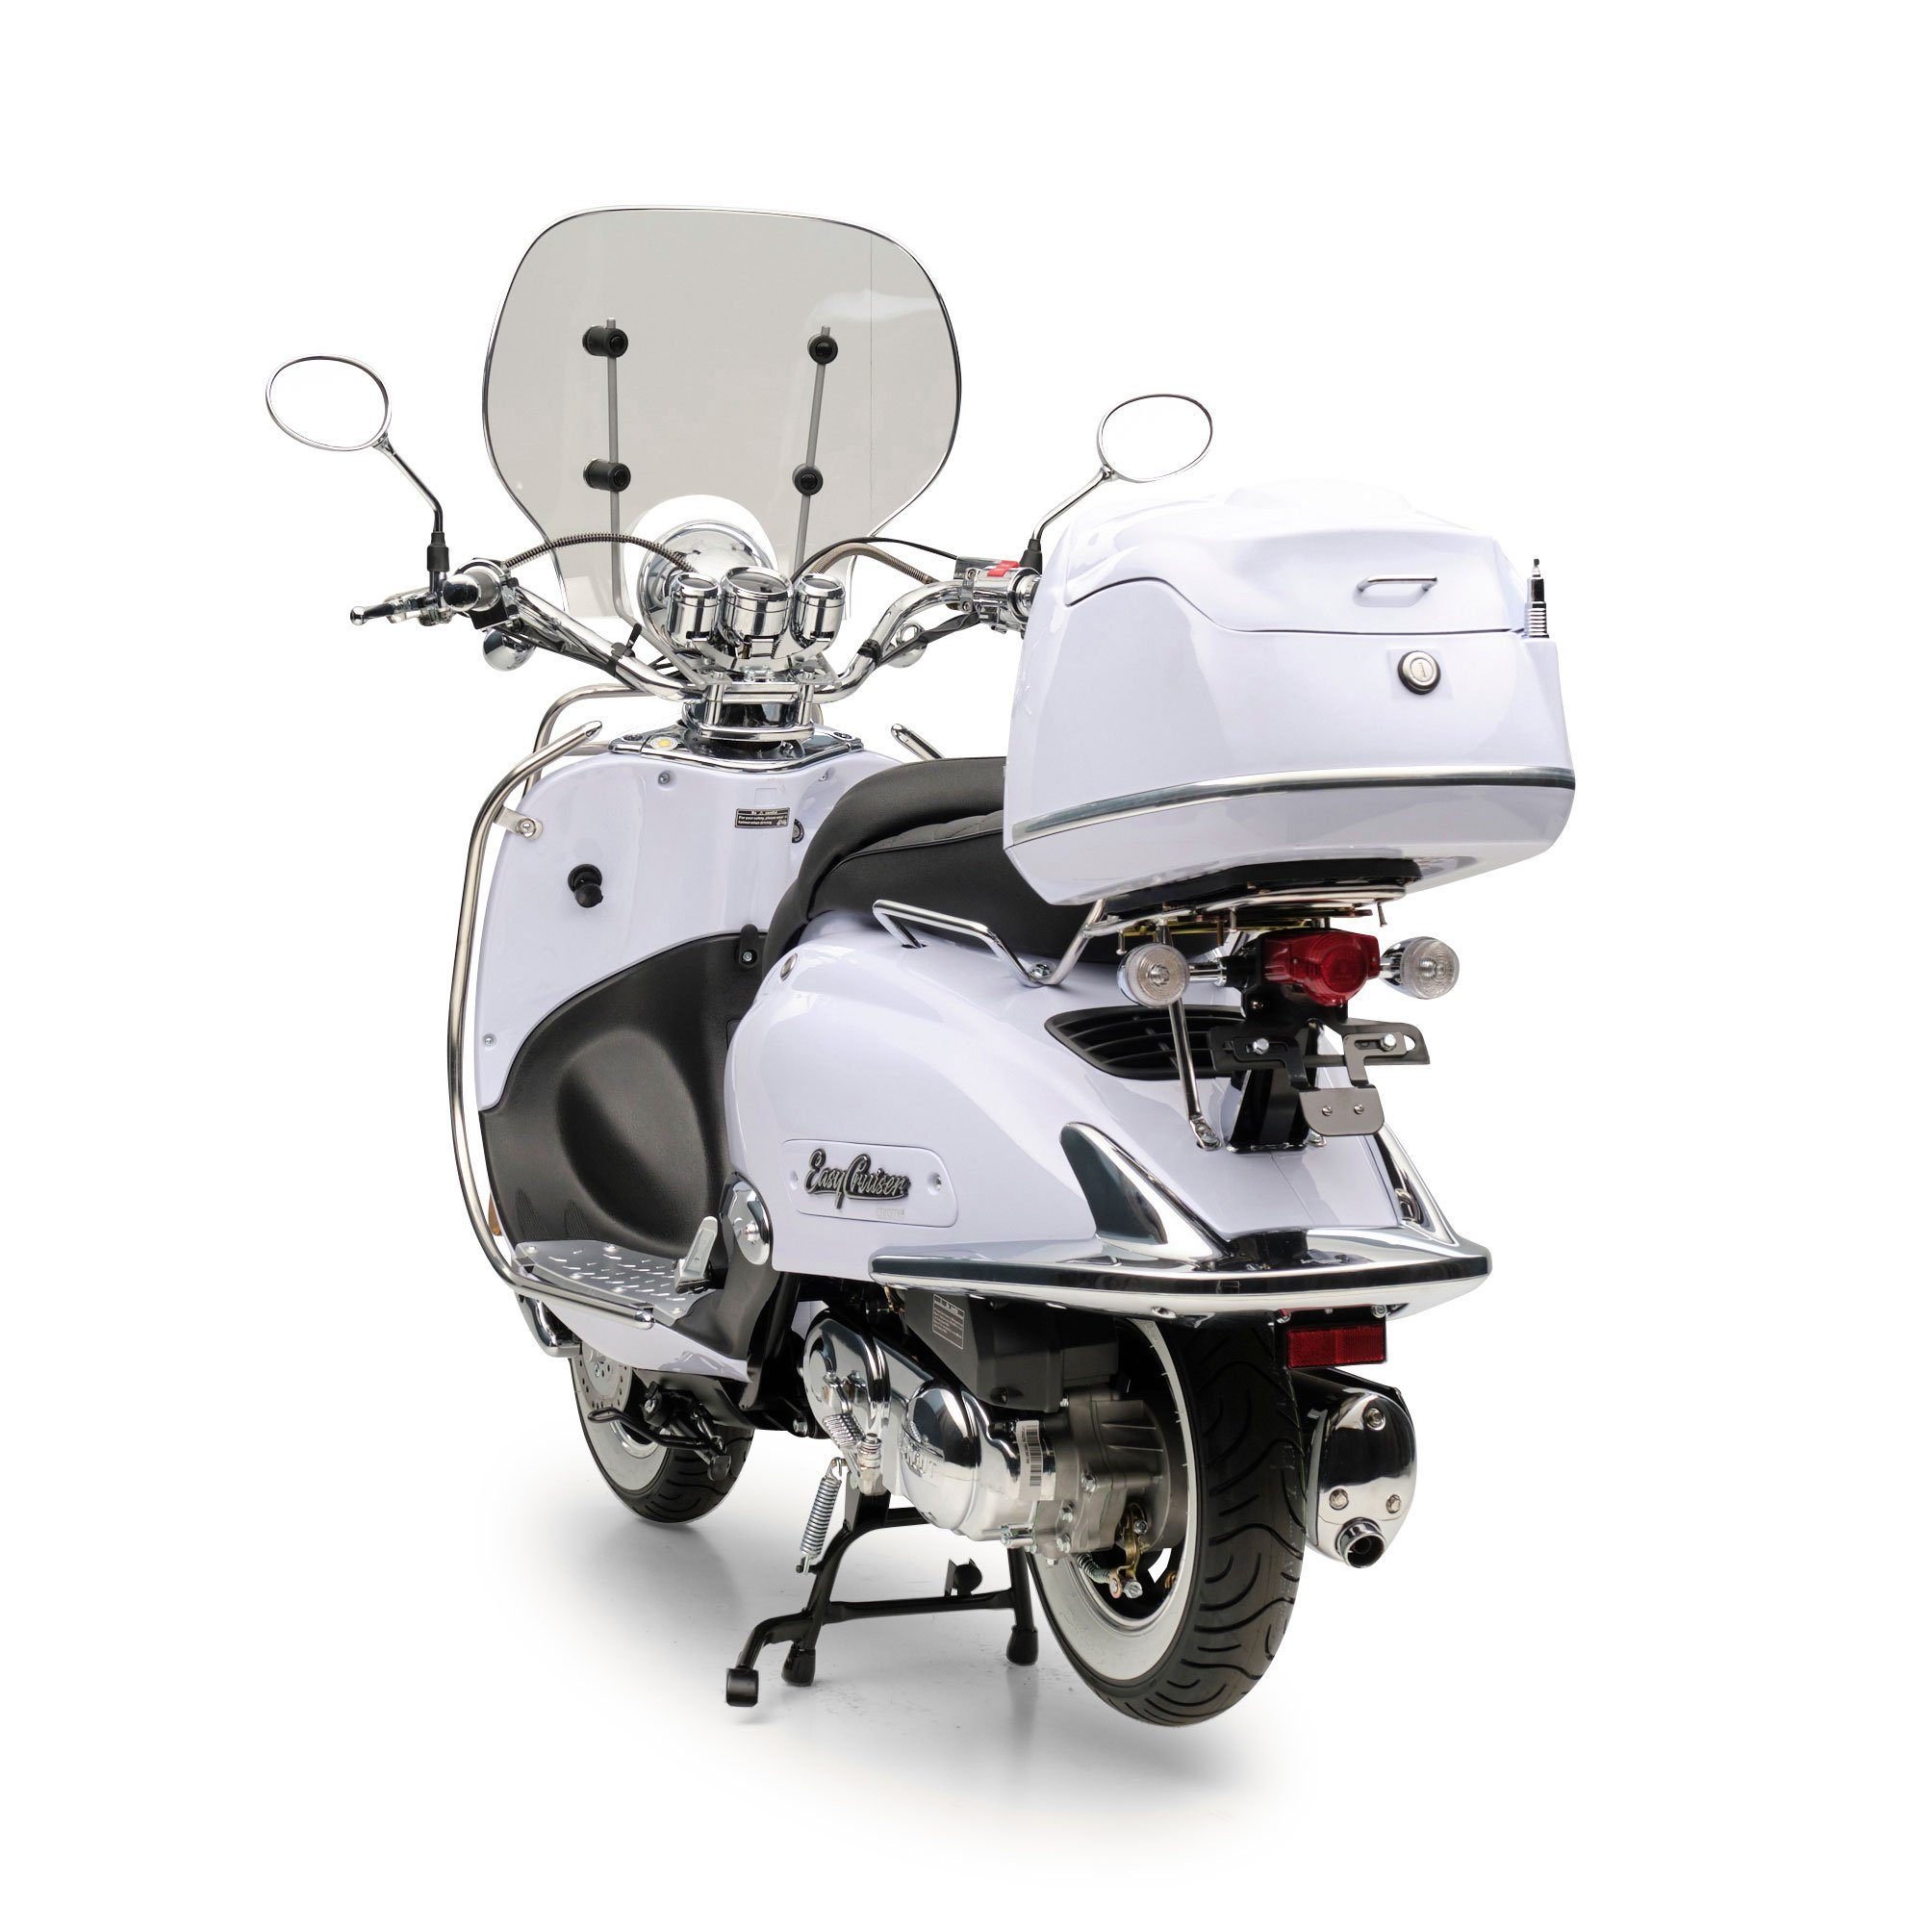 Burnout Motorroller Retroroller 85 EasyCruiser 125ccm km/h, Paket Chrom Eisblau Edition Euro5 Euro ccm, 5, EFI, 125